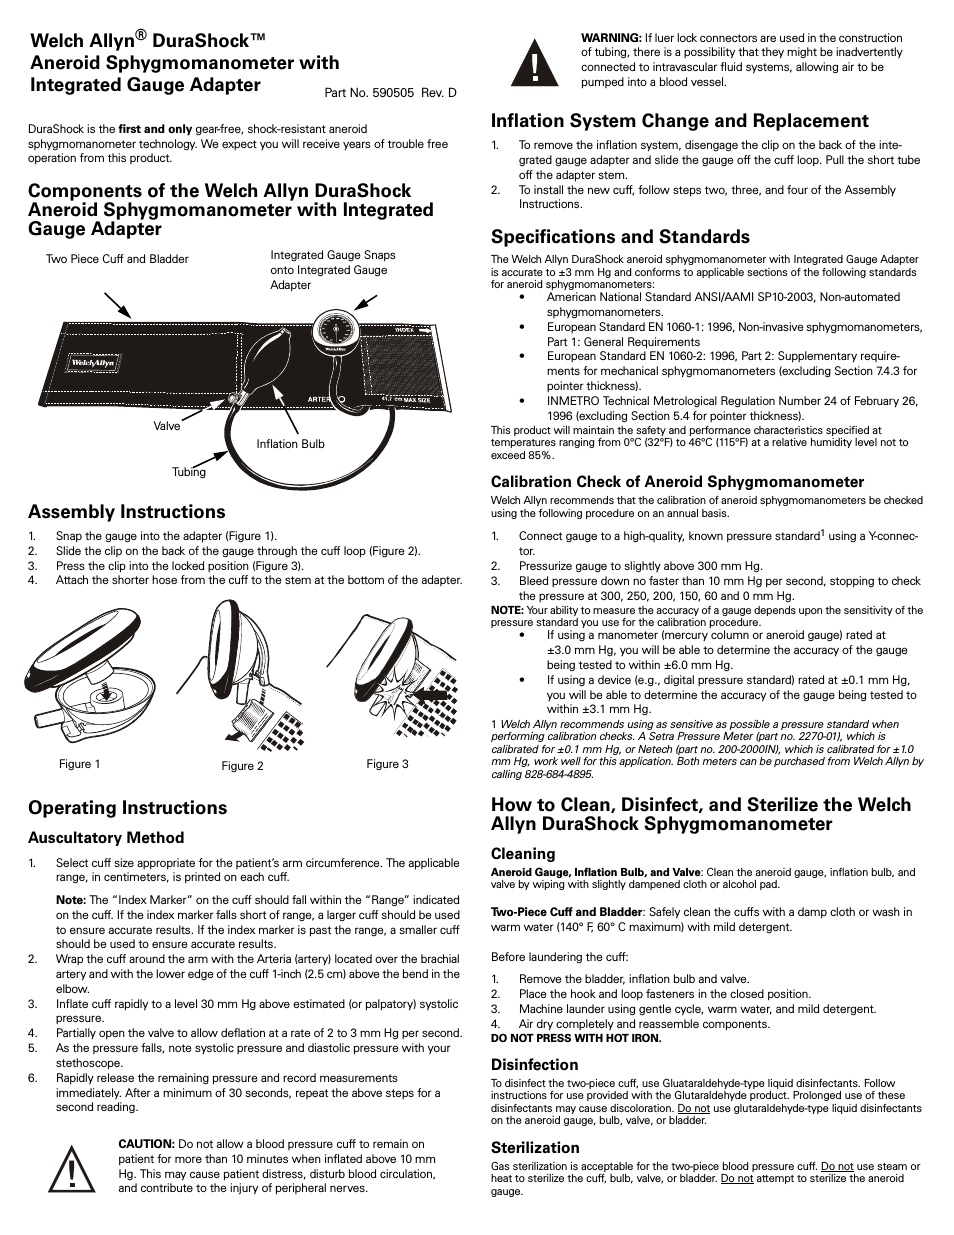 DuraShock Aneroid Sphygmomanometer with Integrated Gauge Adapter - User Manual